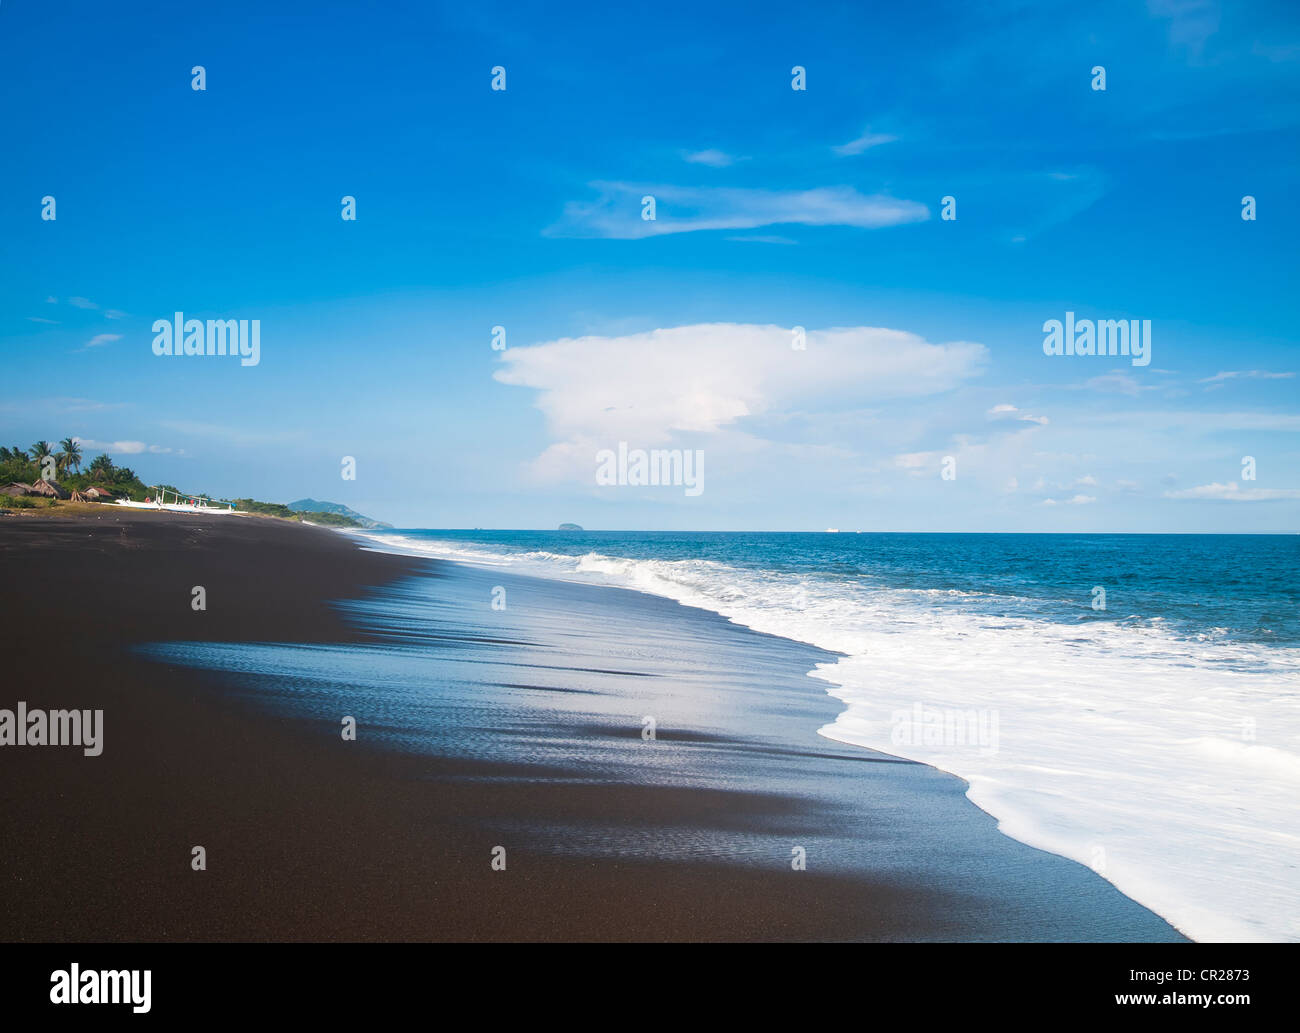 Surreal landscape with black sand beach on Bali island Stock Photo